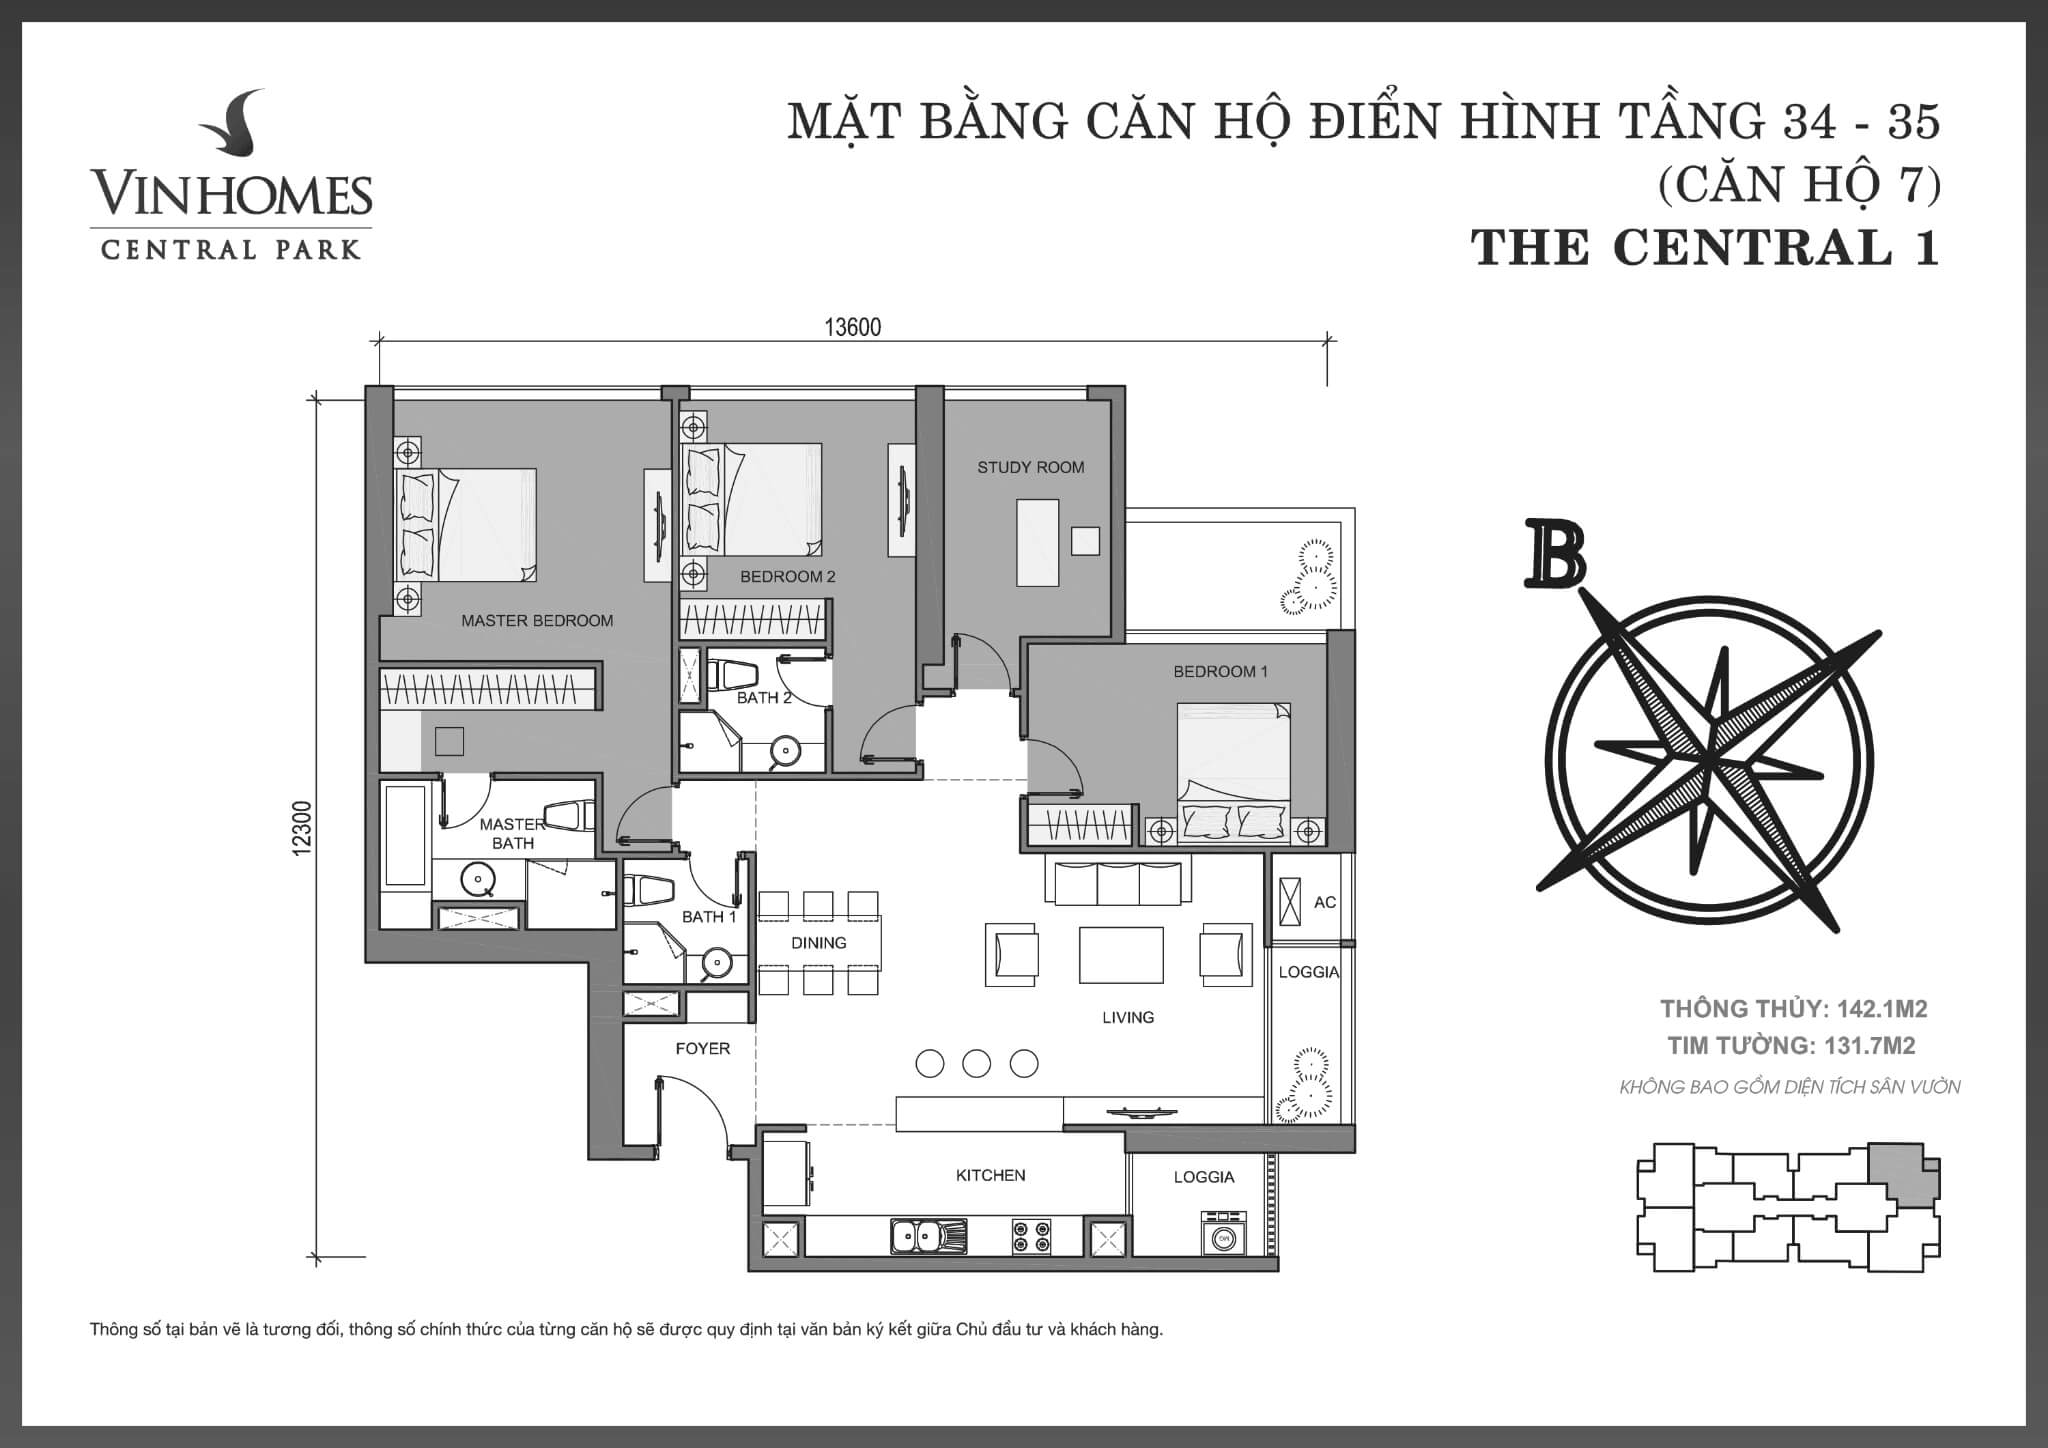 Layout căn hộ số 07 tầng 34-35 tòa The Central 1 - Mặt bằng Vinhomes Central Park